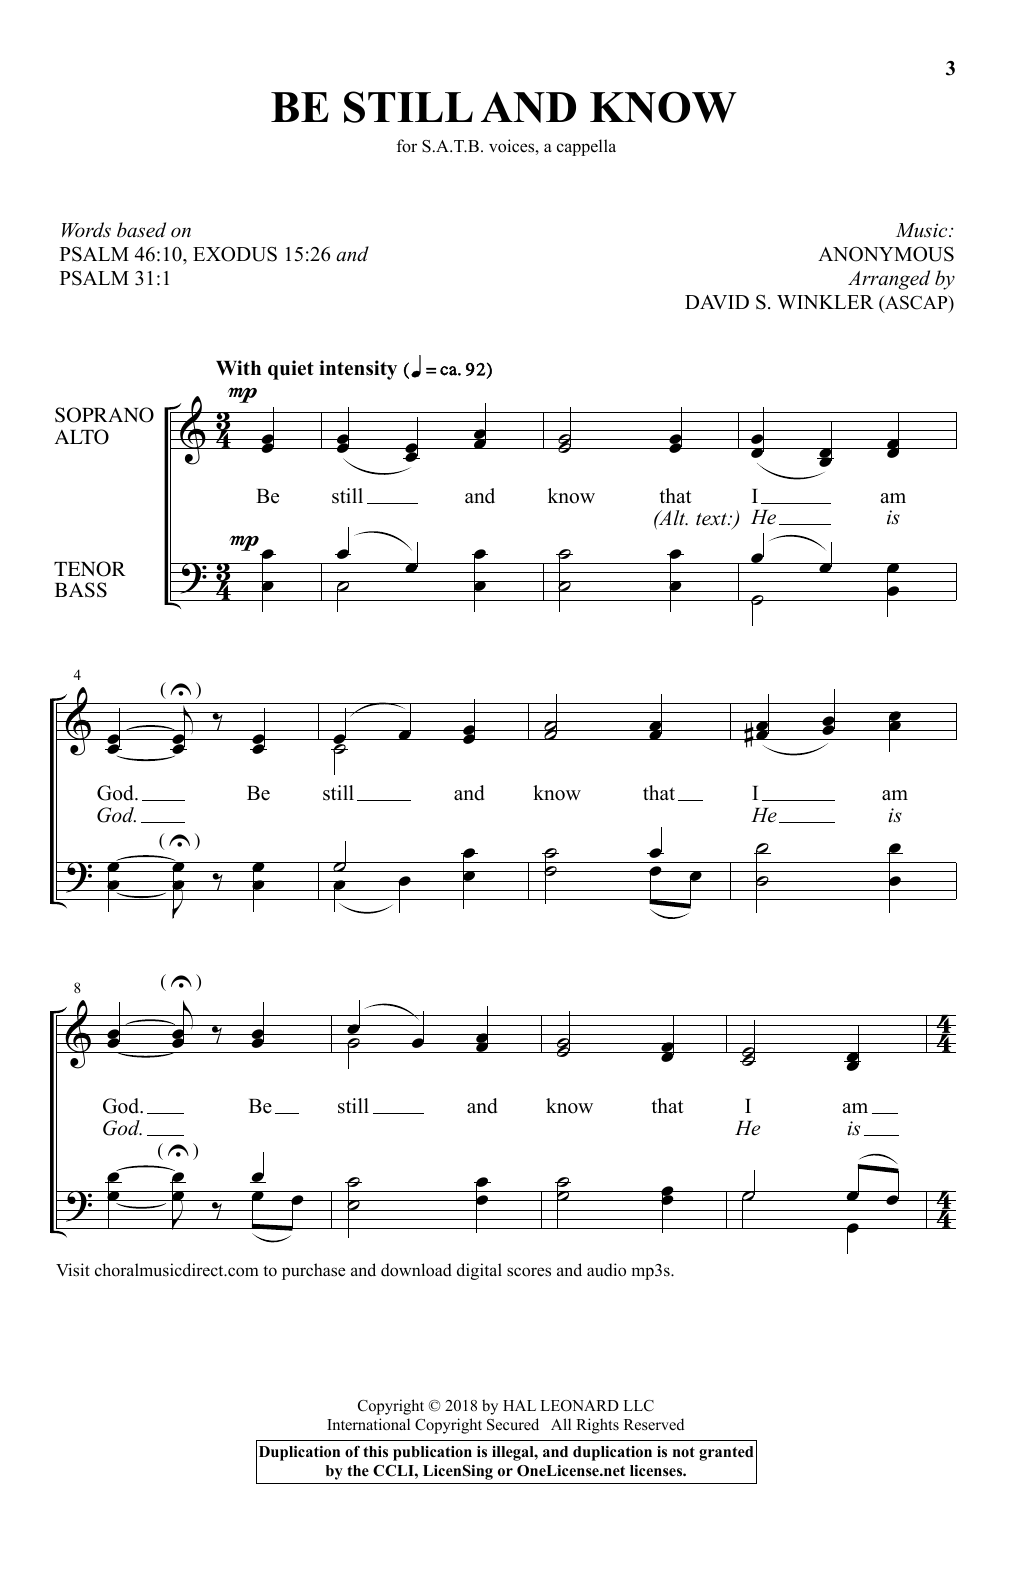 Download David S. Winkler Almost A Cappella Sheet Music